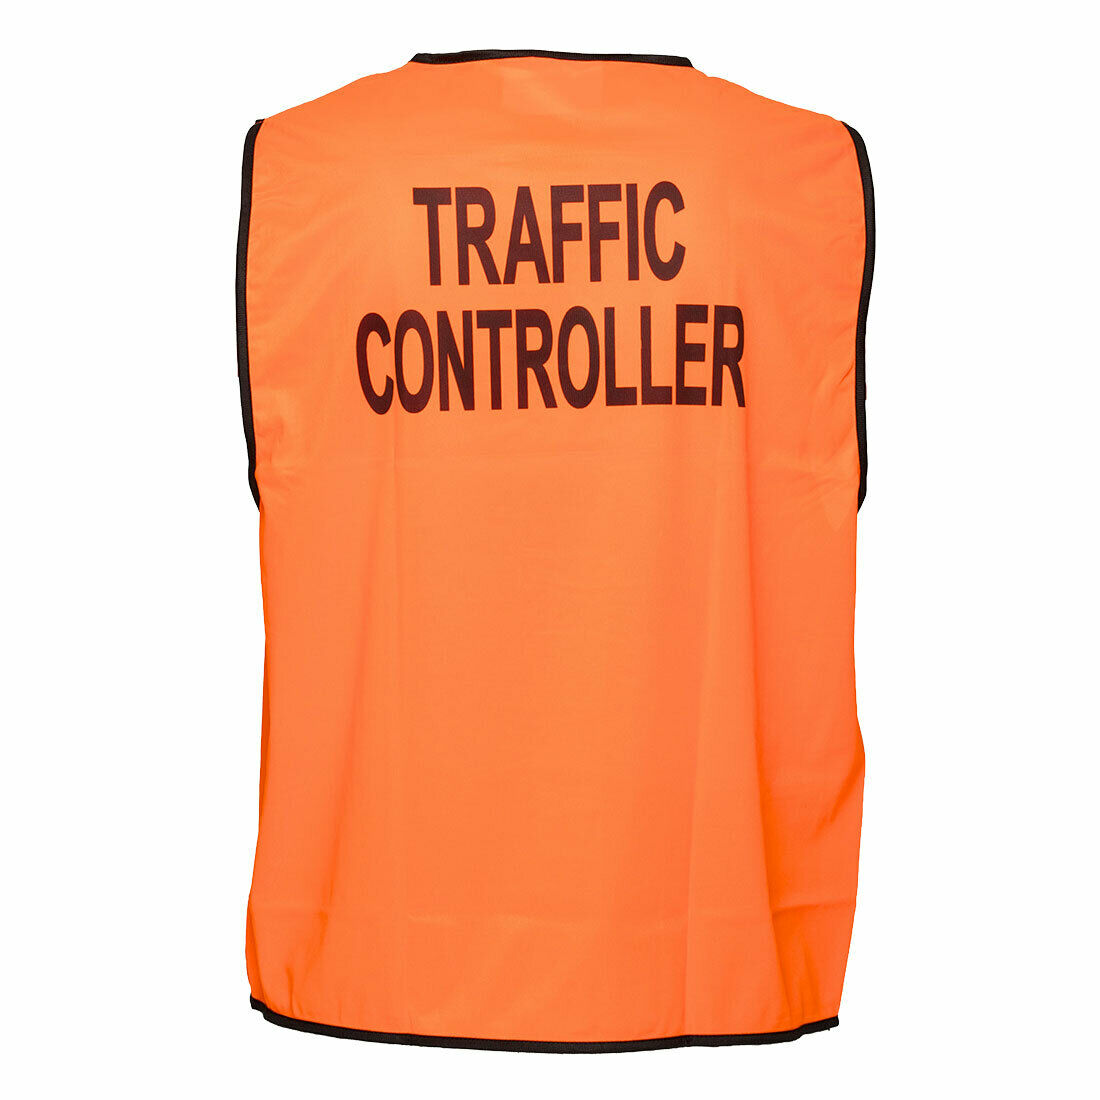 Portwest Traffic Controller Hi-Vis Vest Class D Reflective Work Safety MV119-Collins Clothing Co